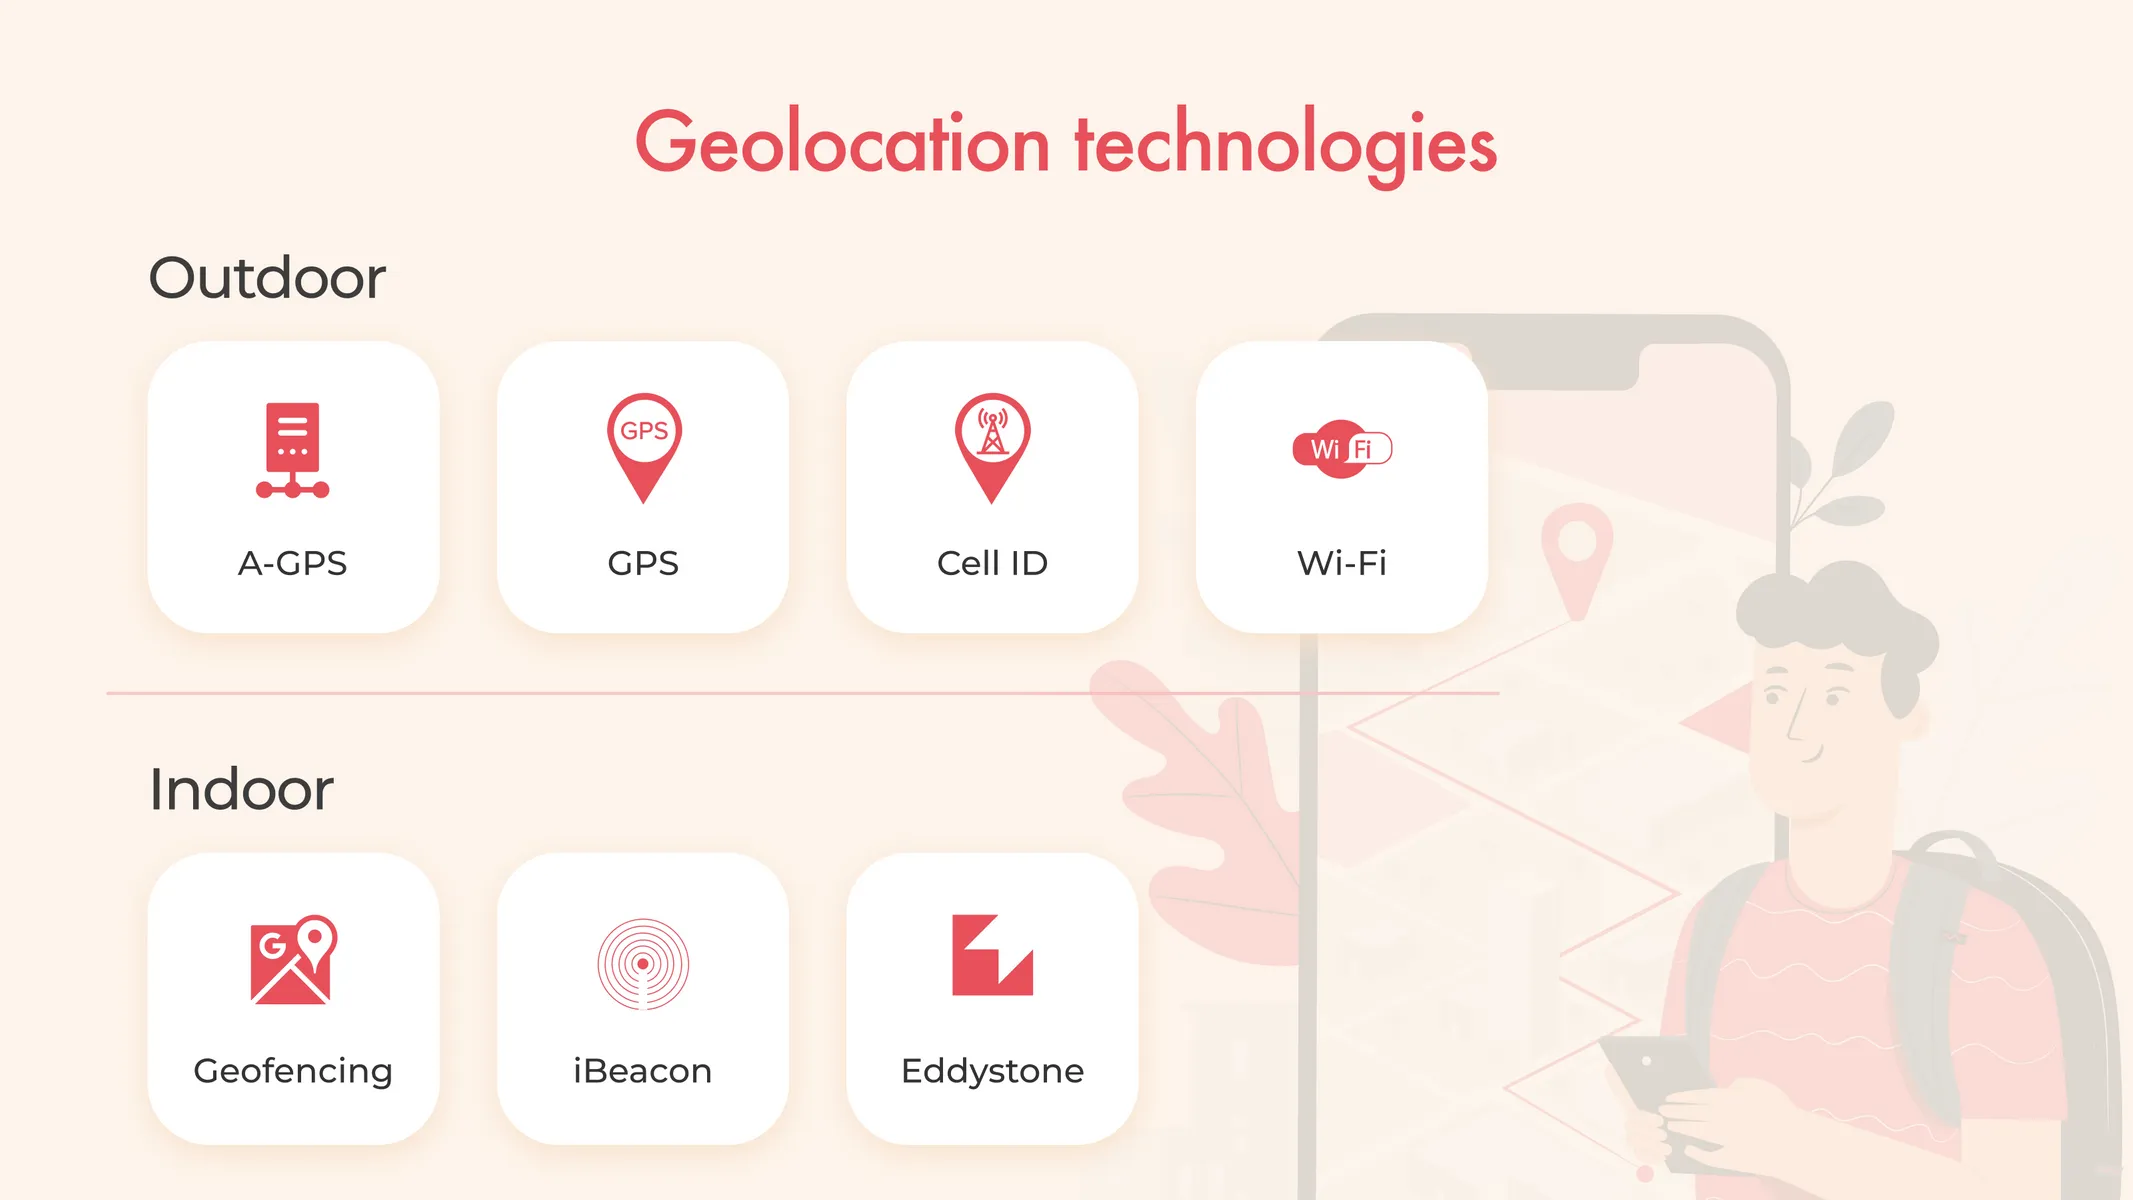 Geolocation technologies